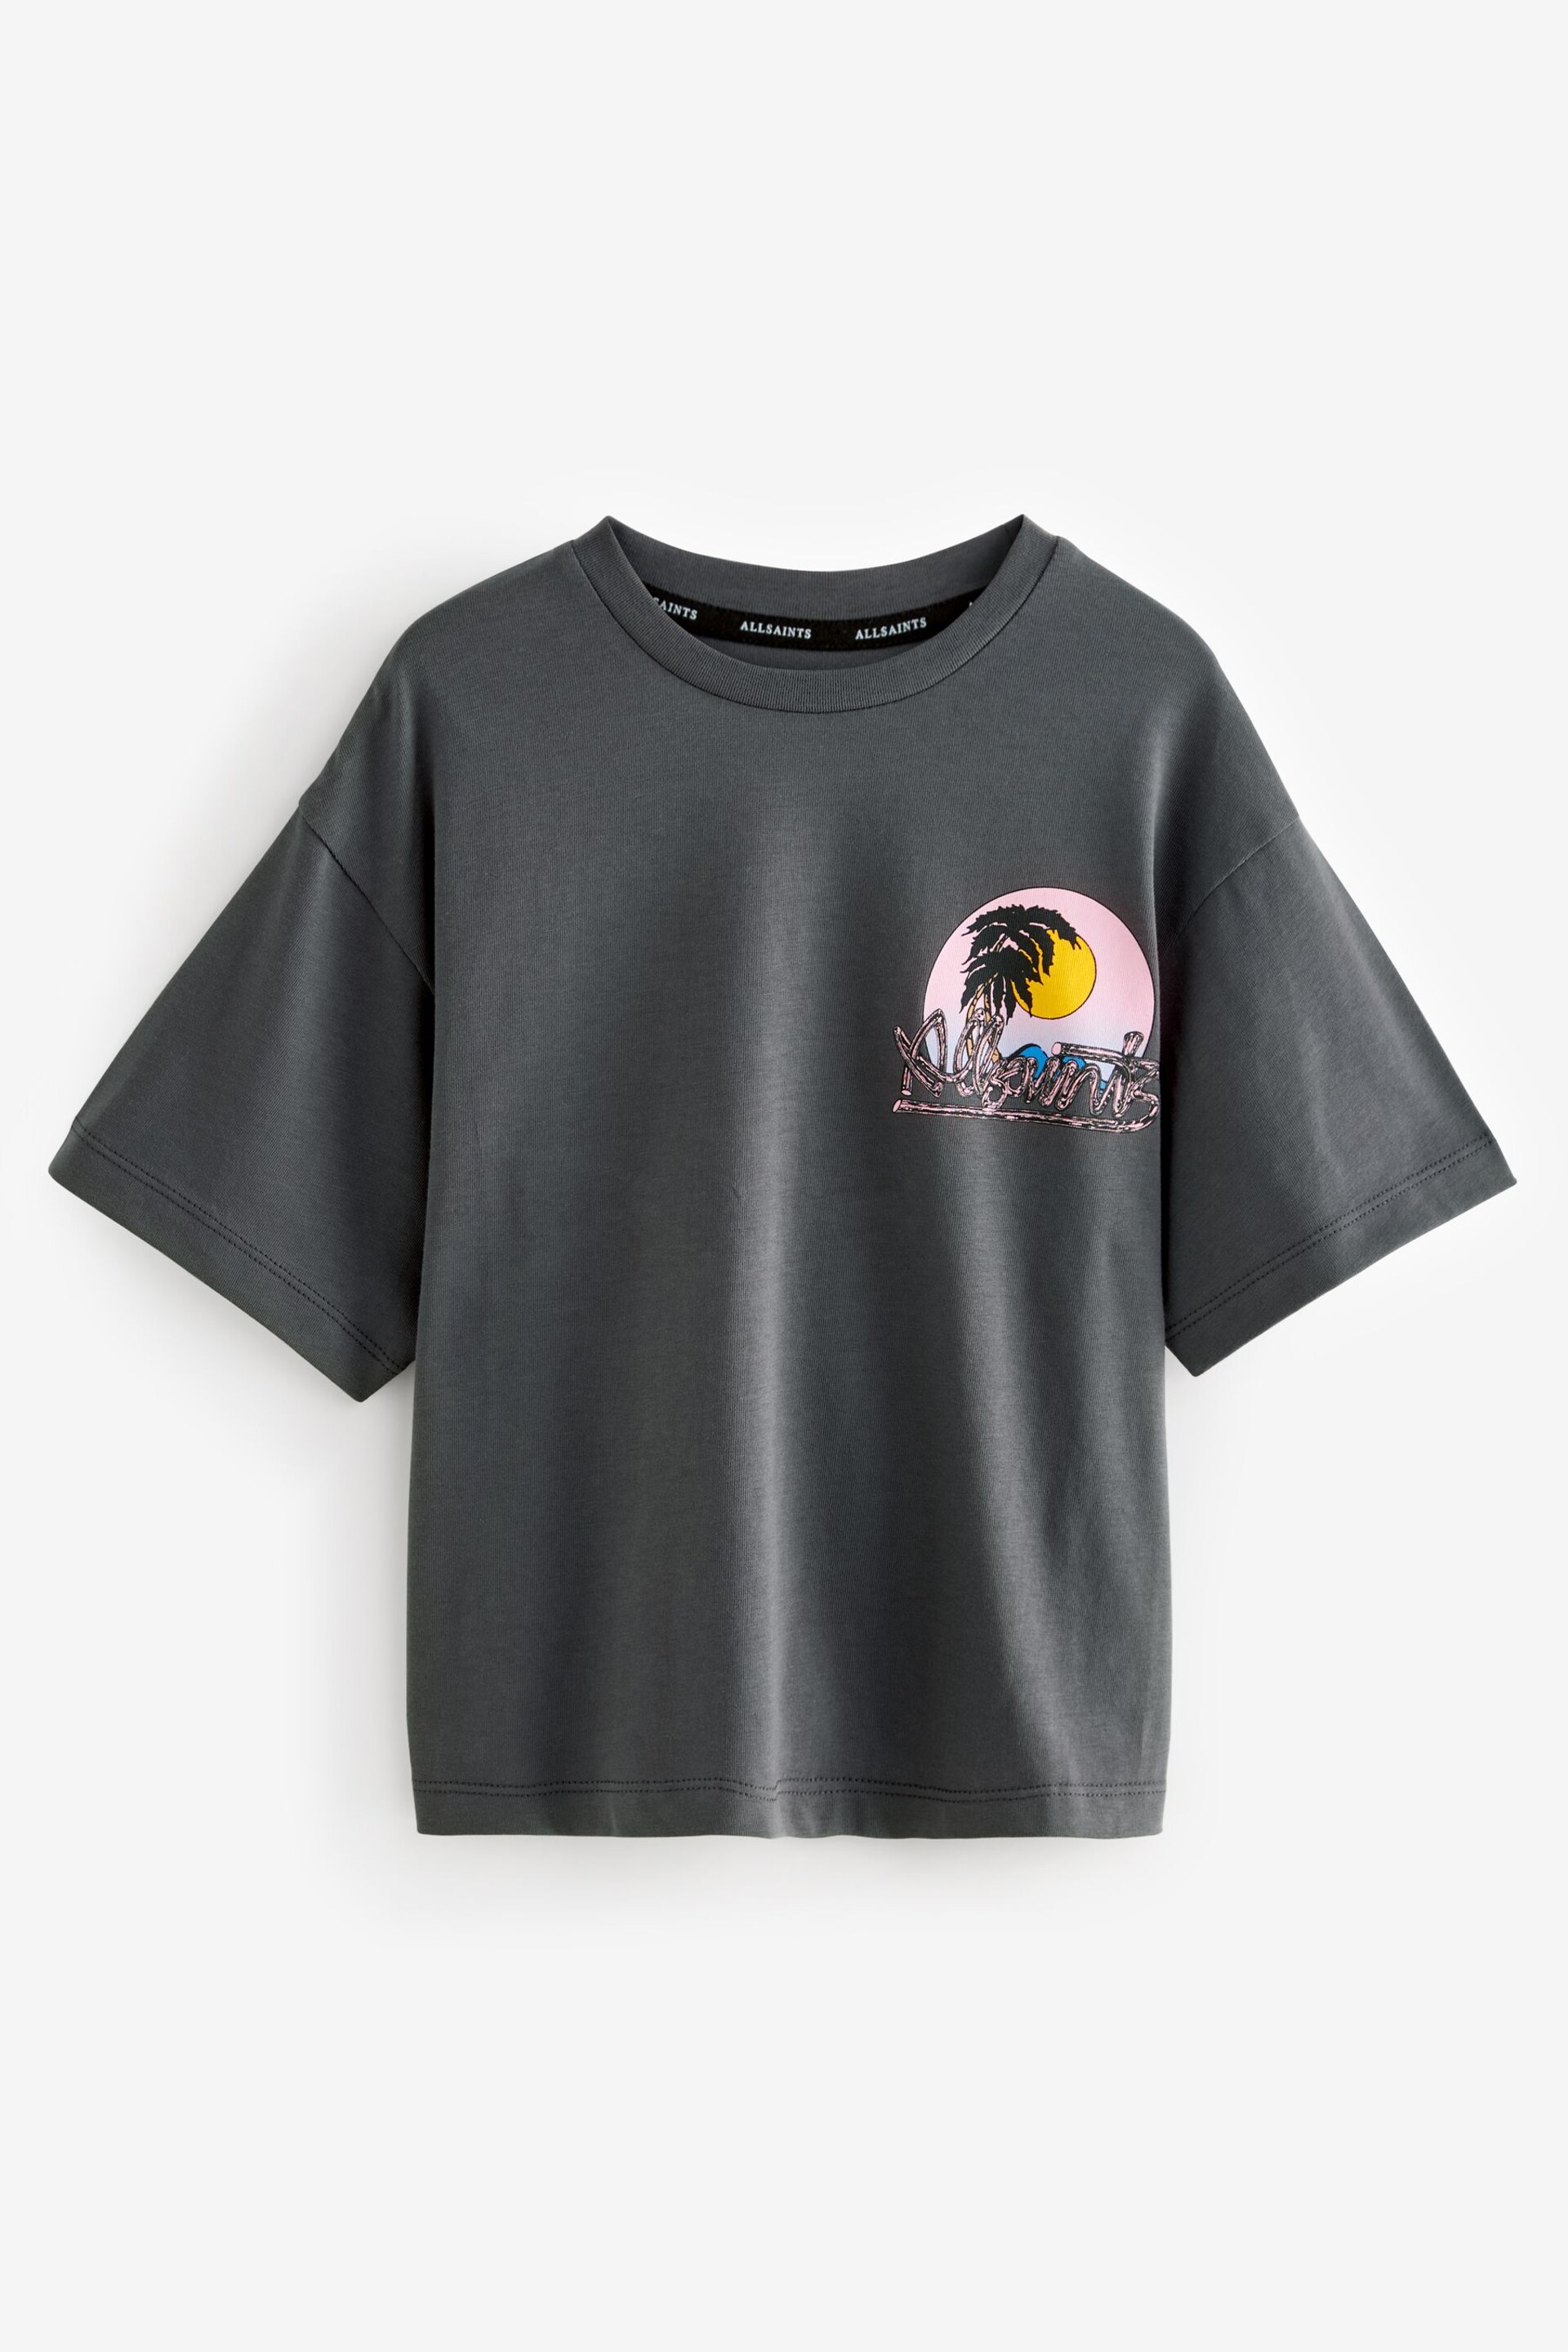 smALLSAINTS Charcoal Grey/Chroma Boys Graphic Oversized Crew T-Shirt - Image 4 of 5